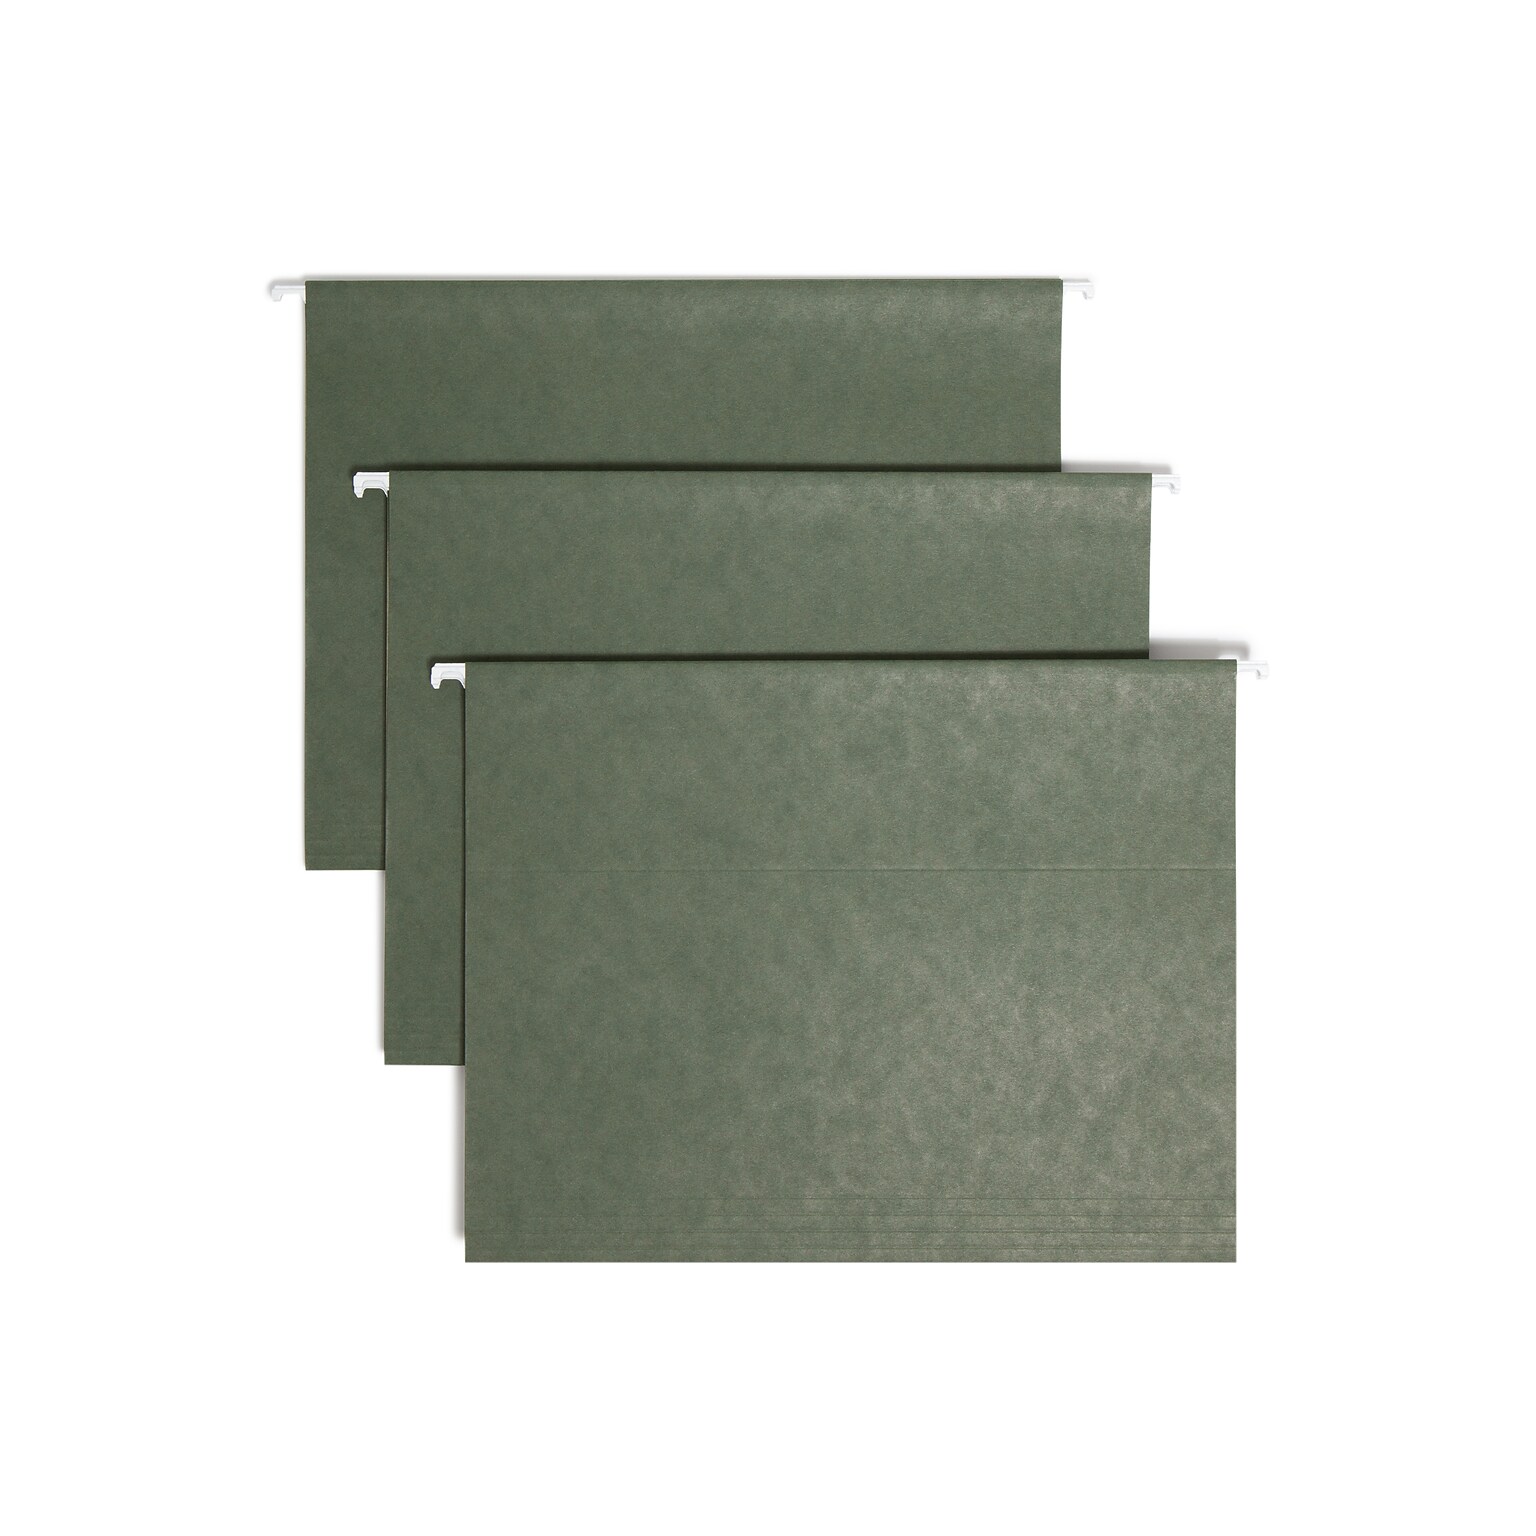 Smead Hanging File Folders, 1/3-Cut Tab, Letter Size, Standard Green, 25/Box (64035)